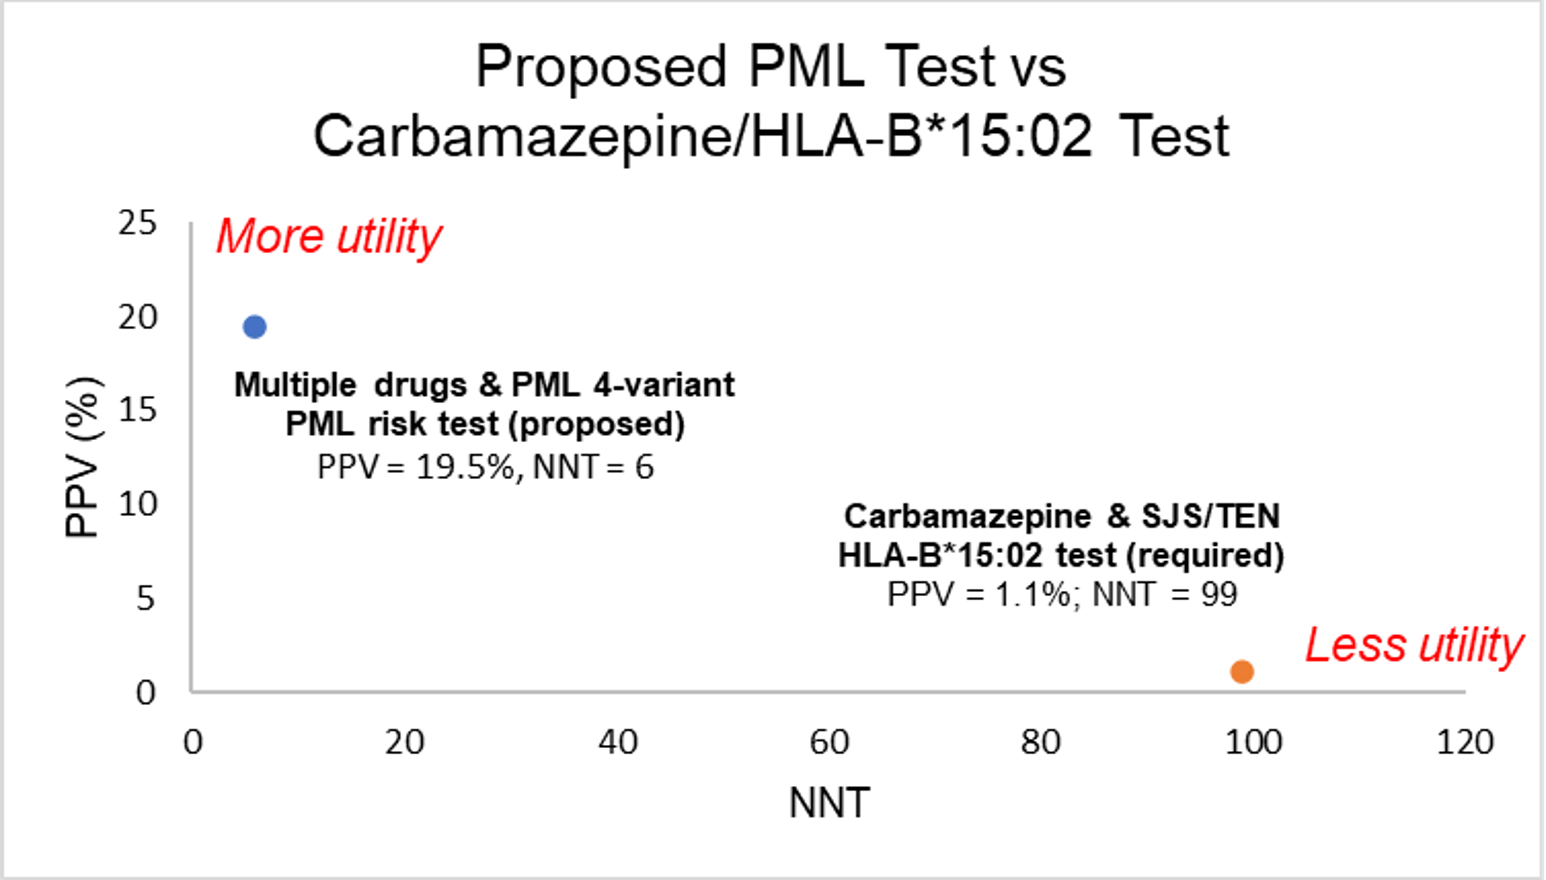 Figure 2. Proposed PML test vs. Carbamazepine/HLA-B*15:02 test